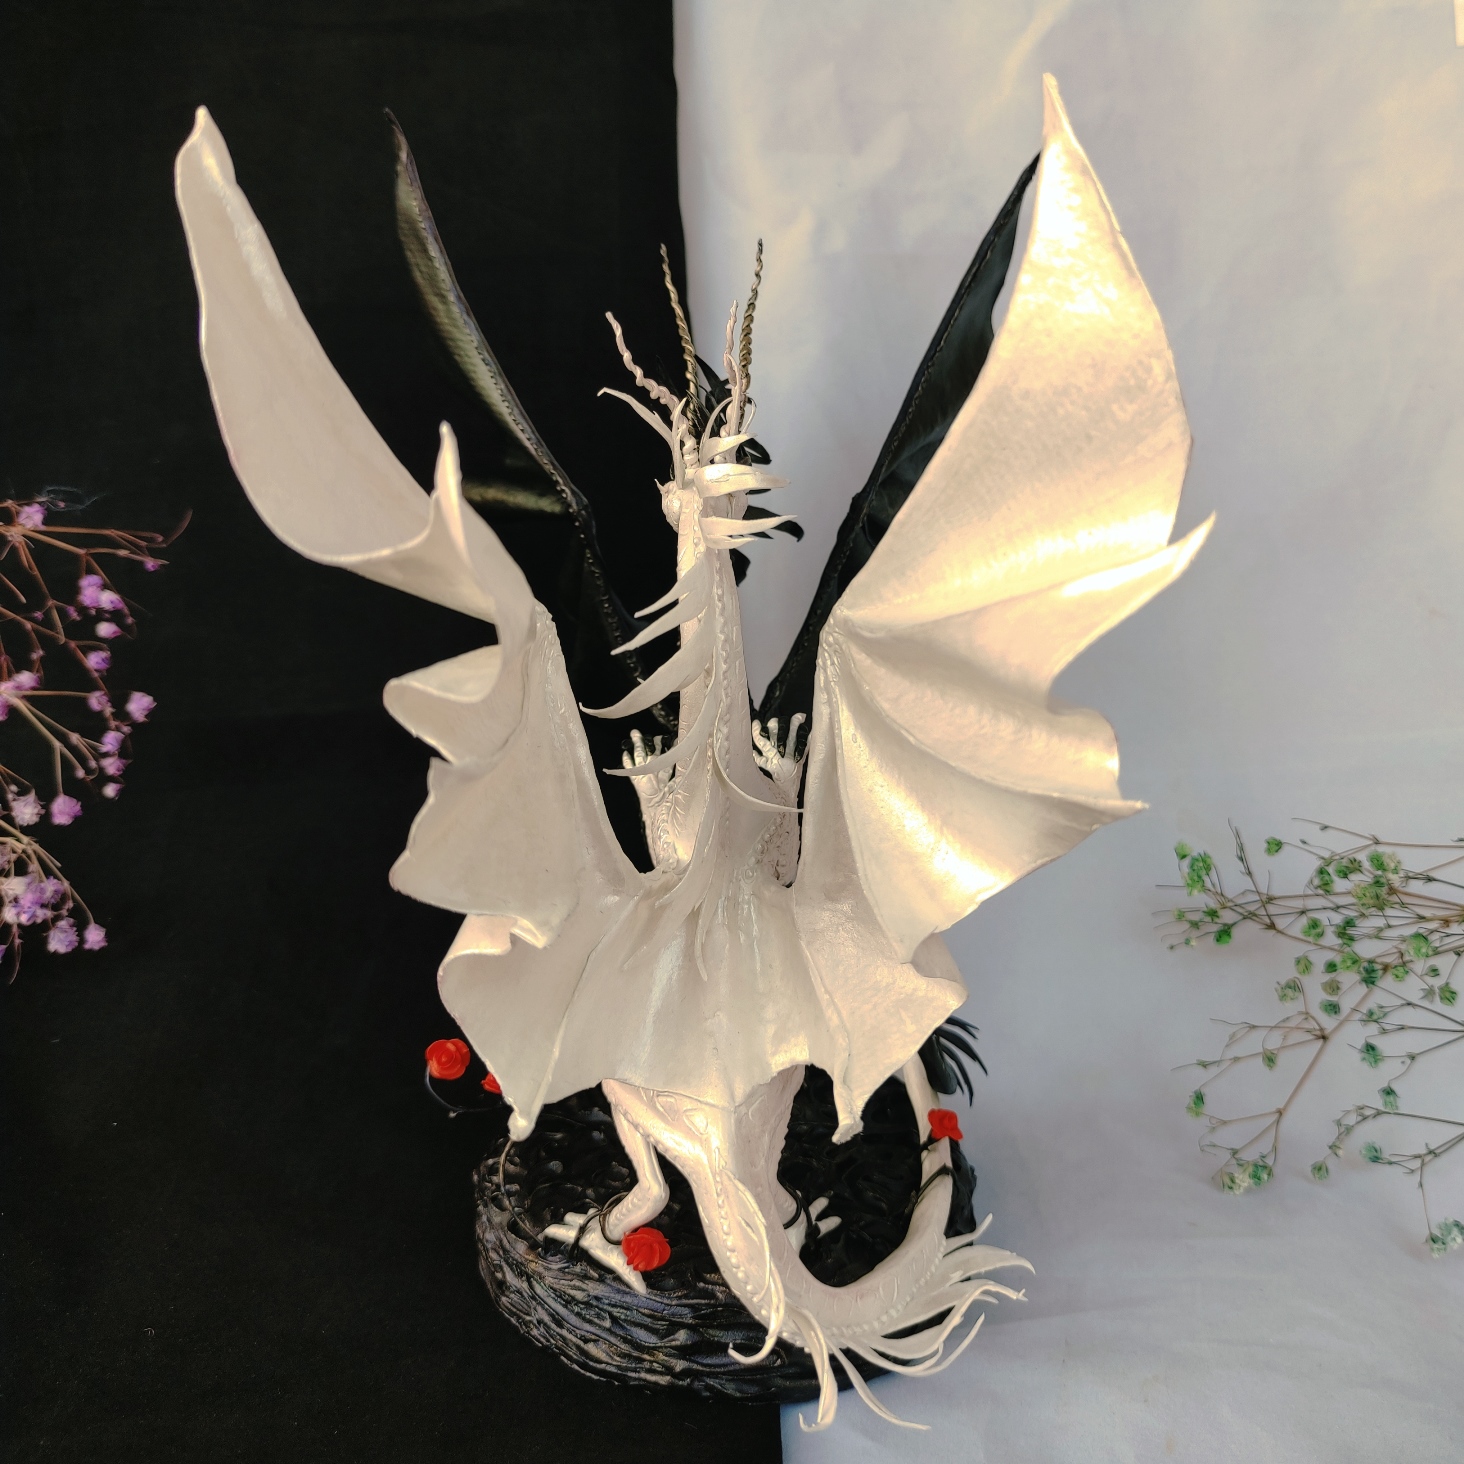 Dragons figures for wedding cake. Available in FelisFantasyArt shop!